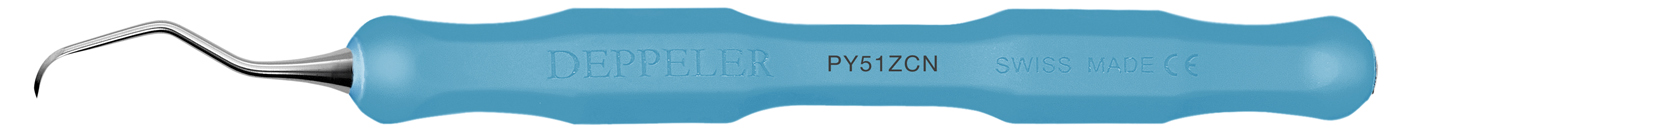 Scaler PY51Z